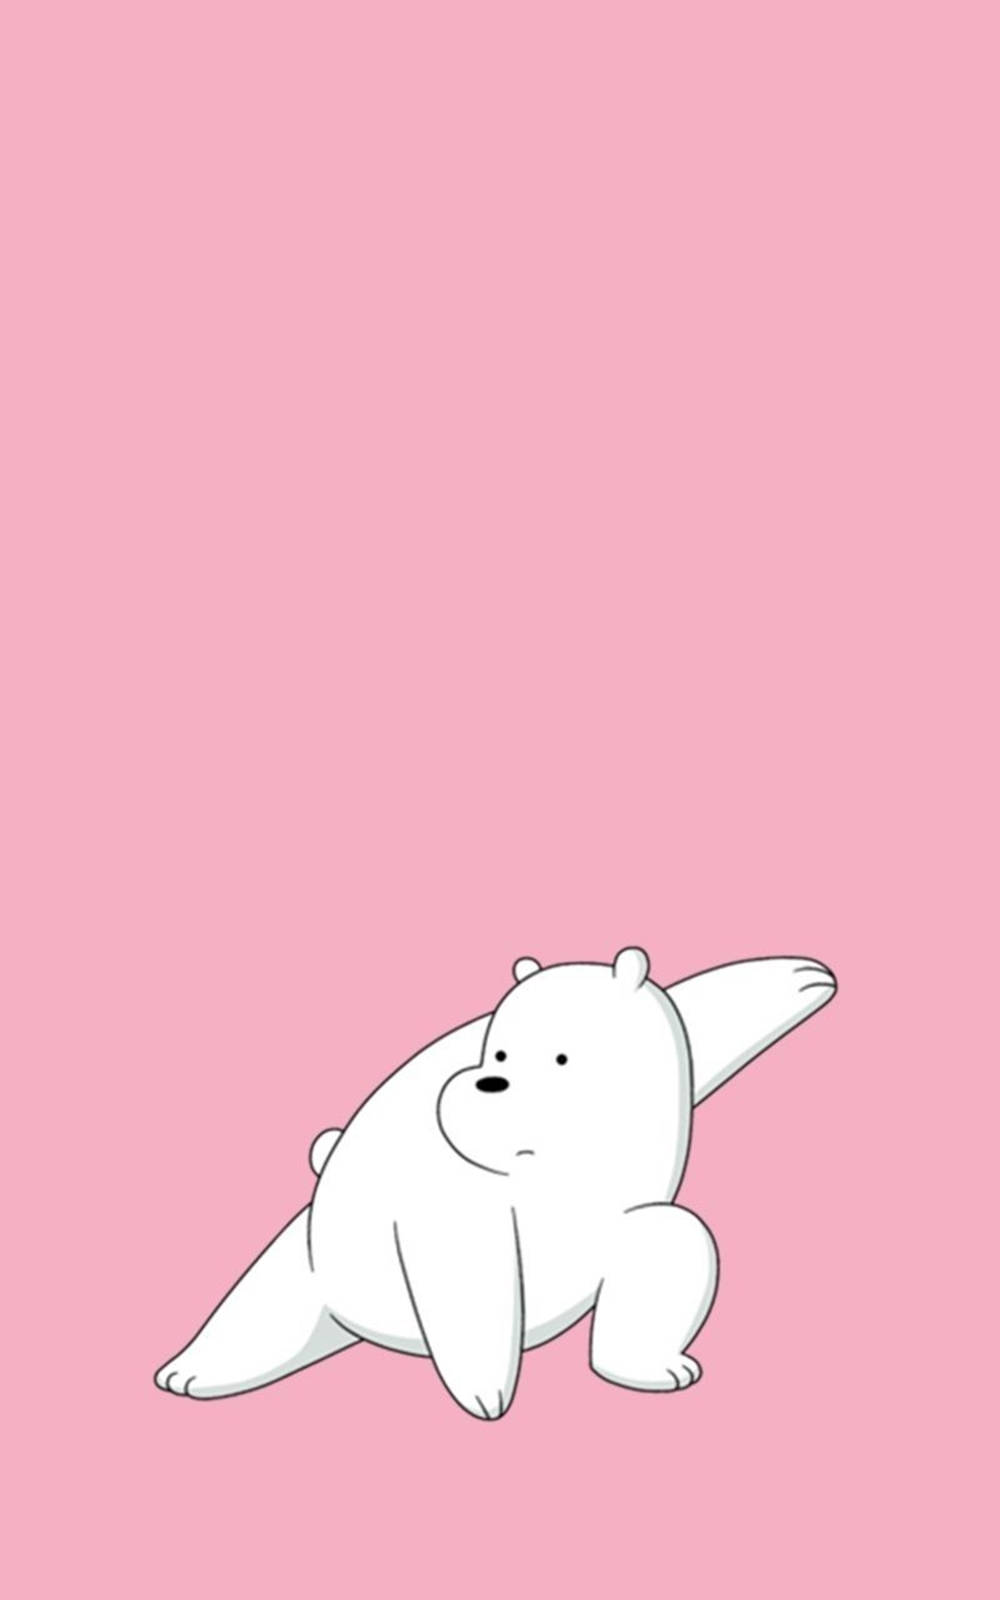 Ice Bear Cartoon In Fighting Stance Wallpaper